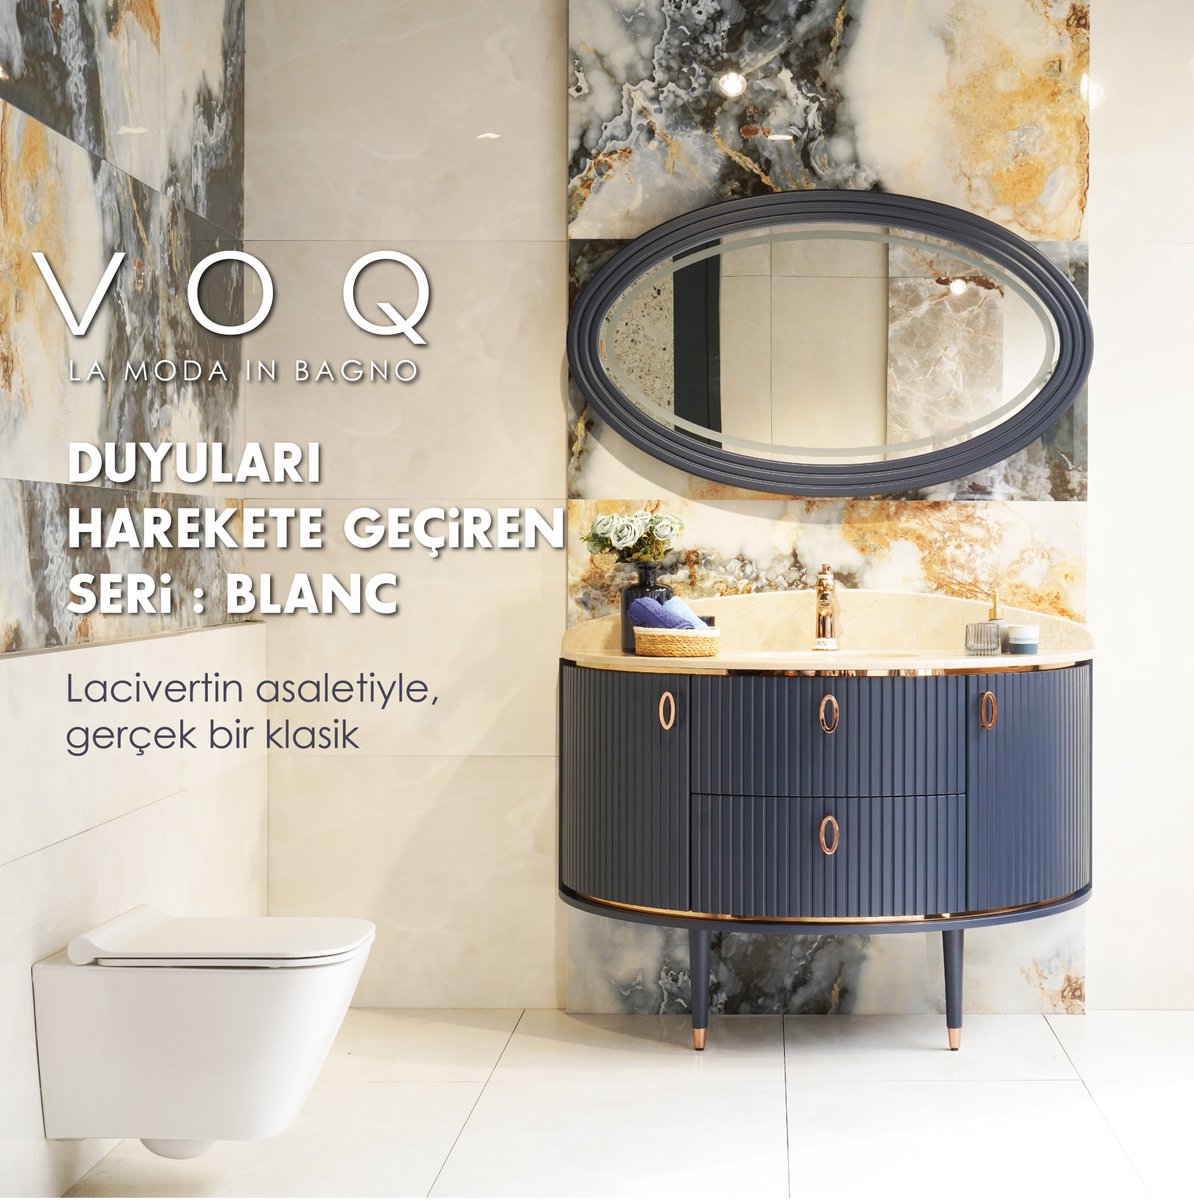 Duyuları harekete geçiren seri : BLANC

Series that stimulates the senses: BLANC

#voq #voqbagno #lamodainbagno #arredobagno #bathroomfurniture #banyomobilyası #blanc